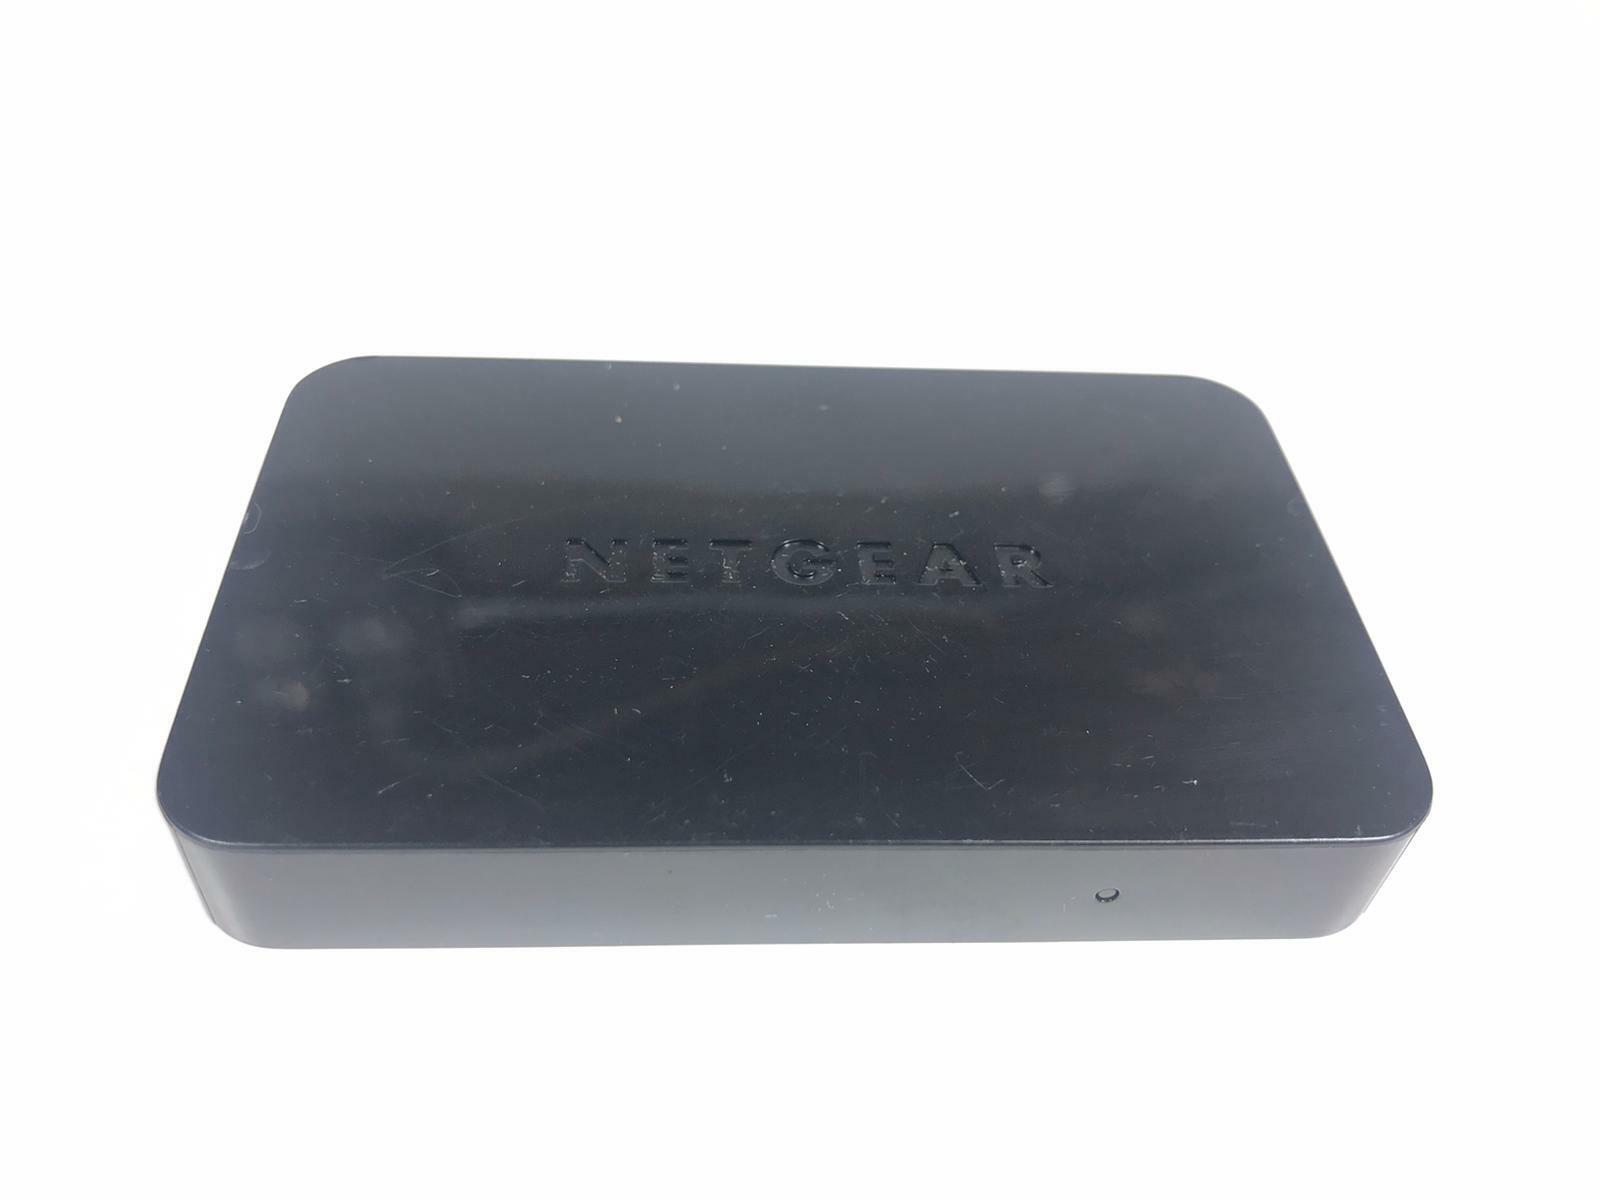 Netgear PTV3000 Push2TV Wireless Display Adapter